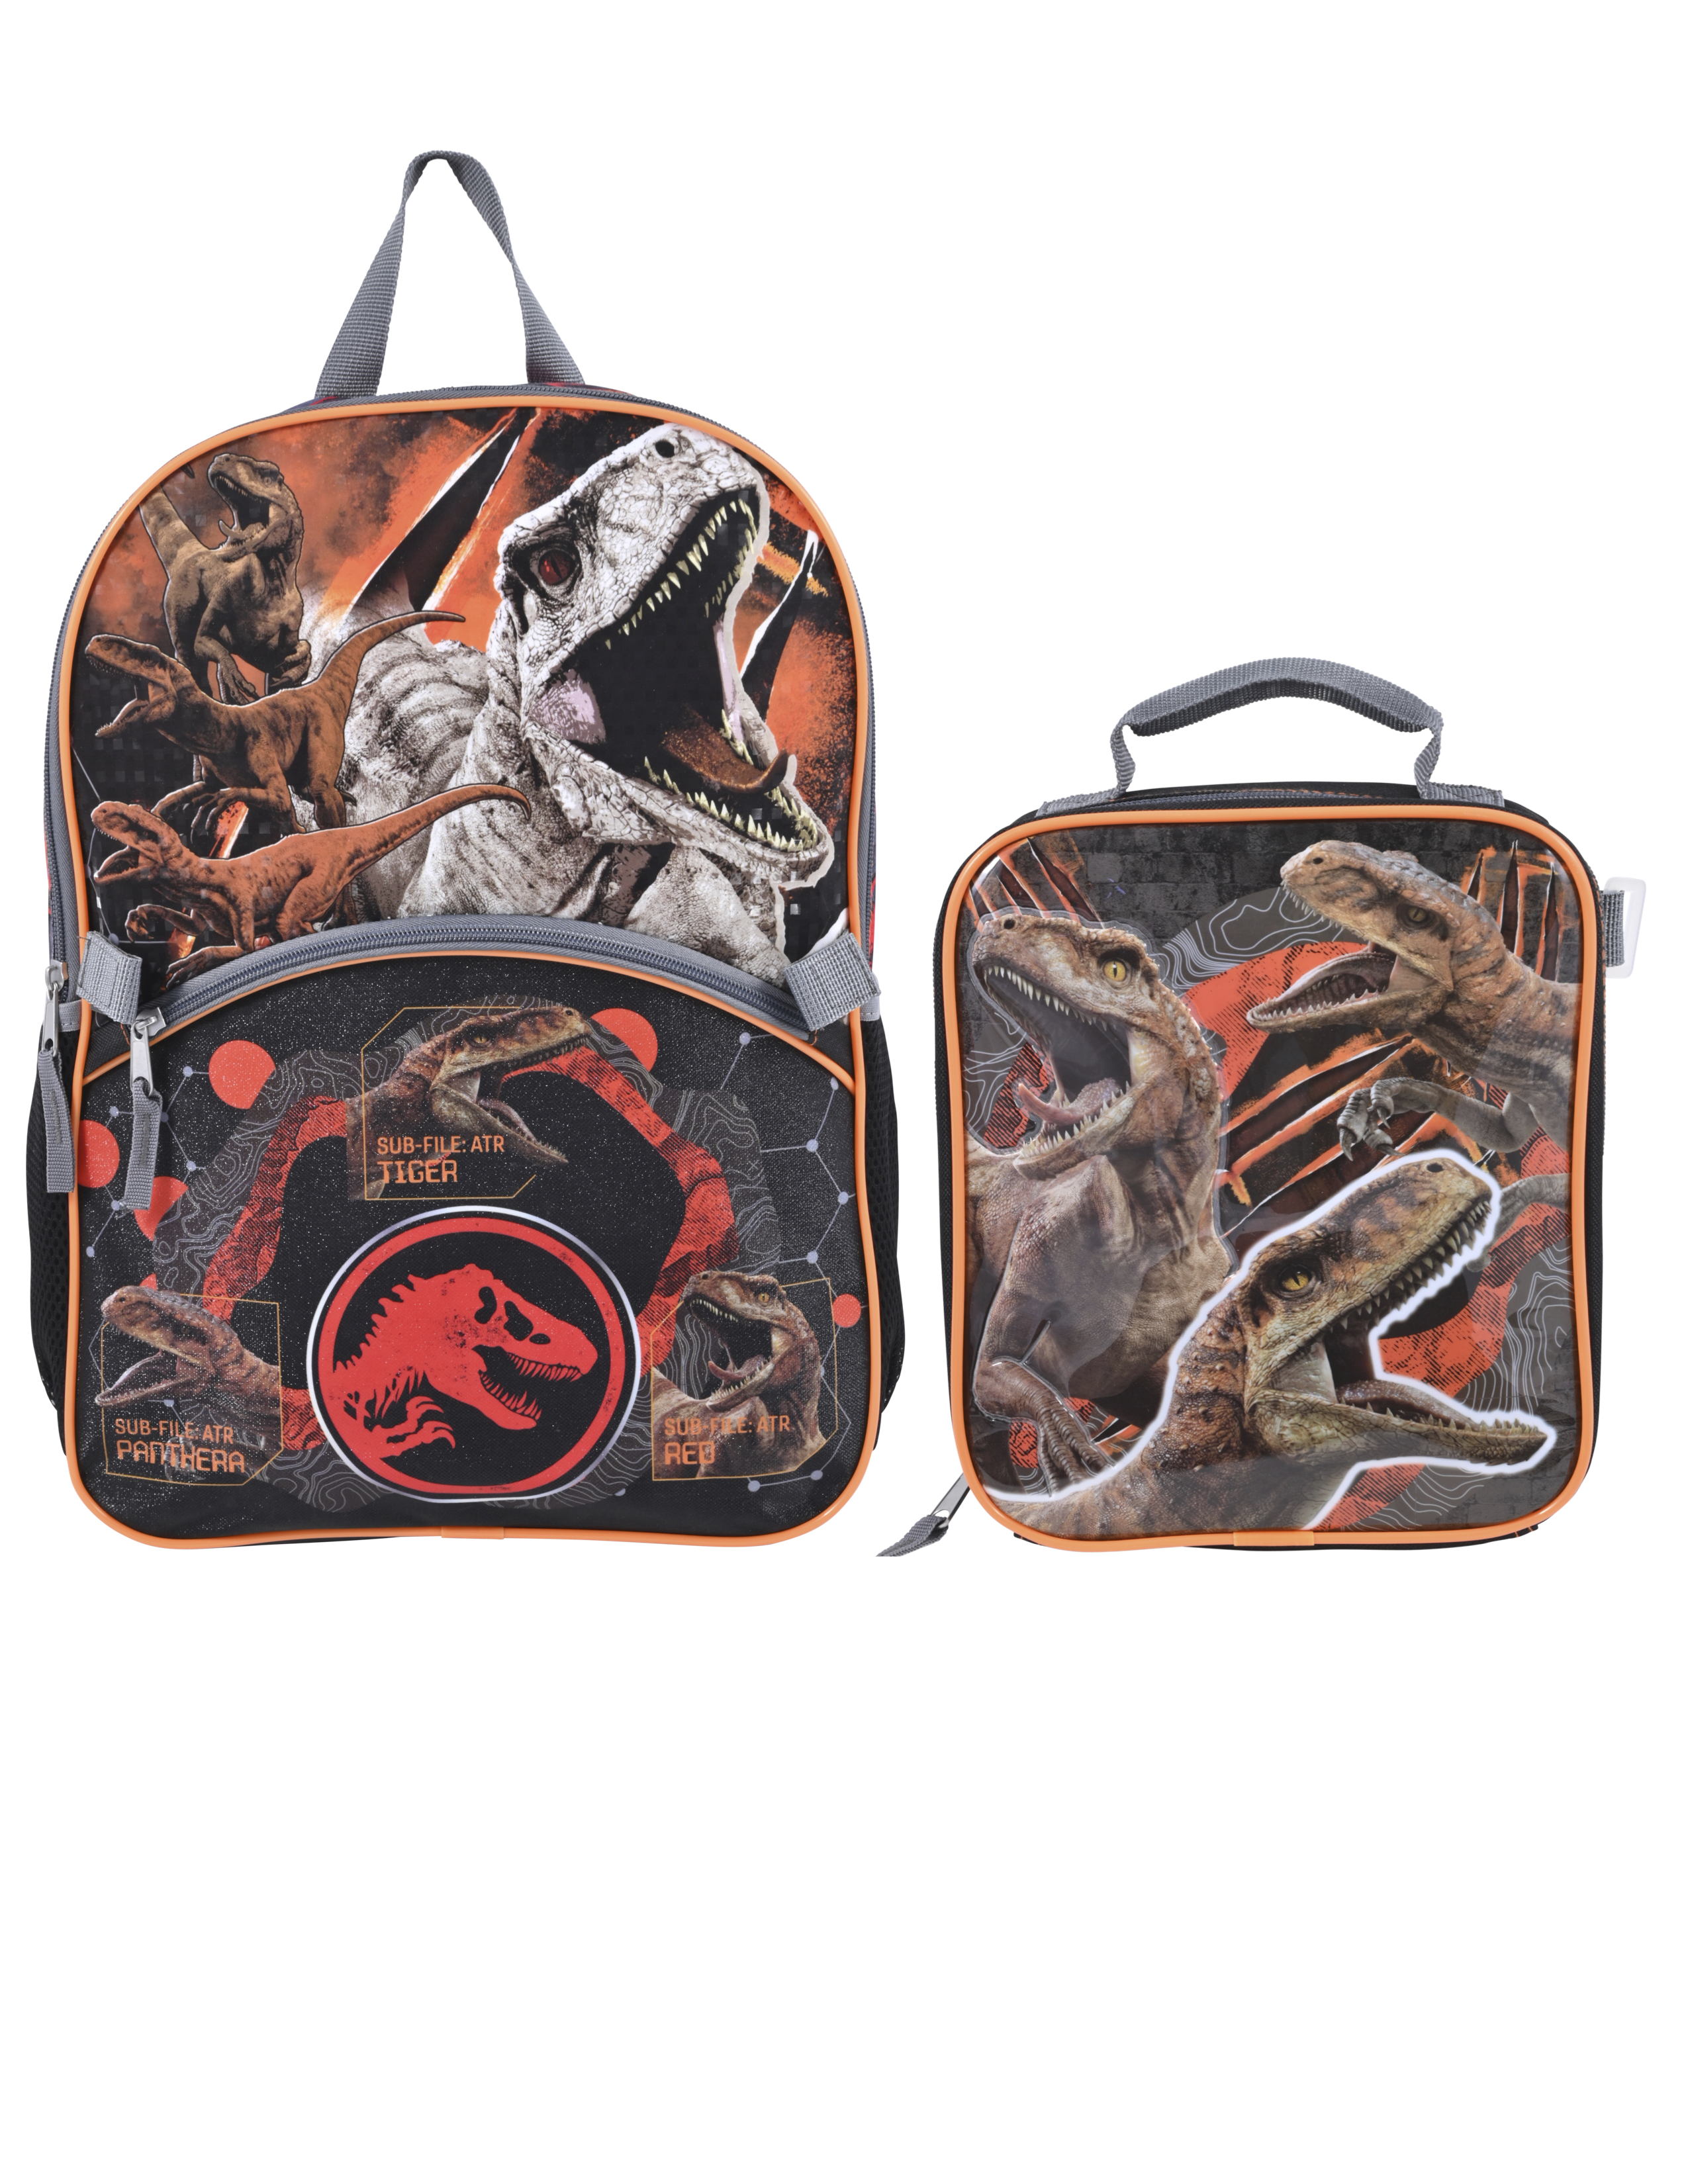 Universal Jurassic World Boys 17" Laptop Backpack 2-Piece Set with Lunch Bag, Black Orange - image 5 of 9